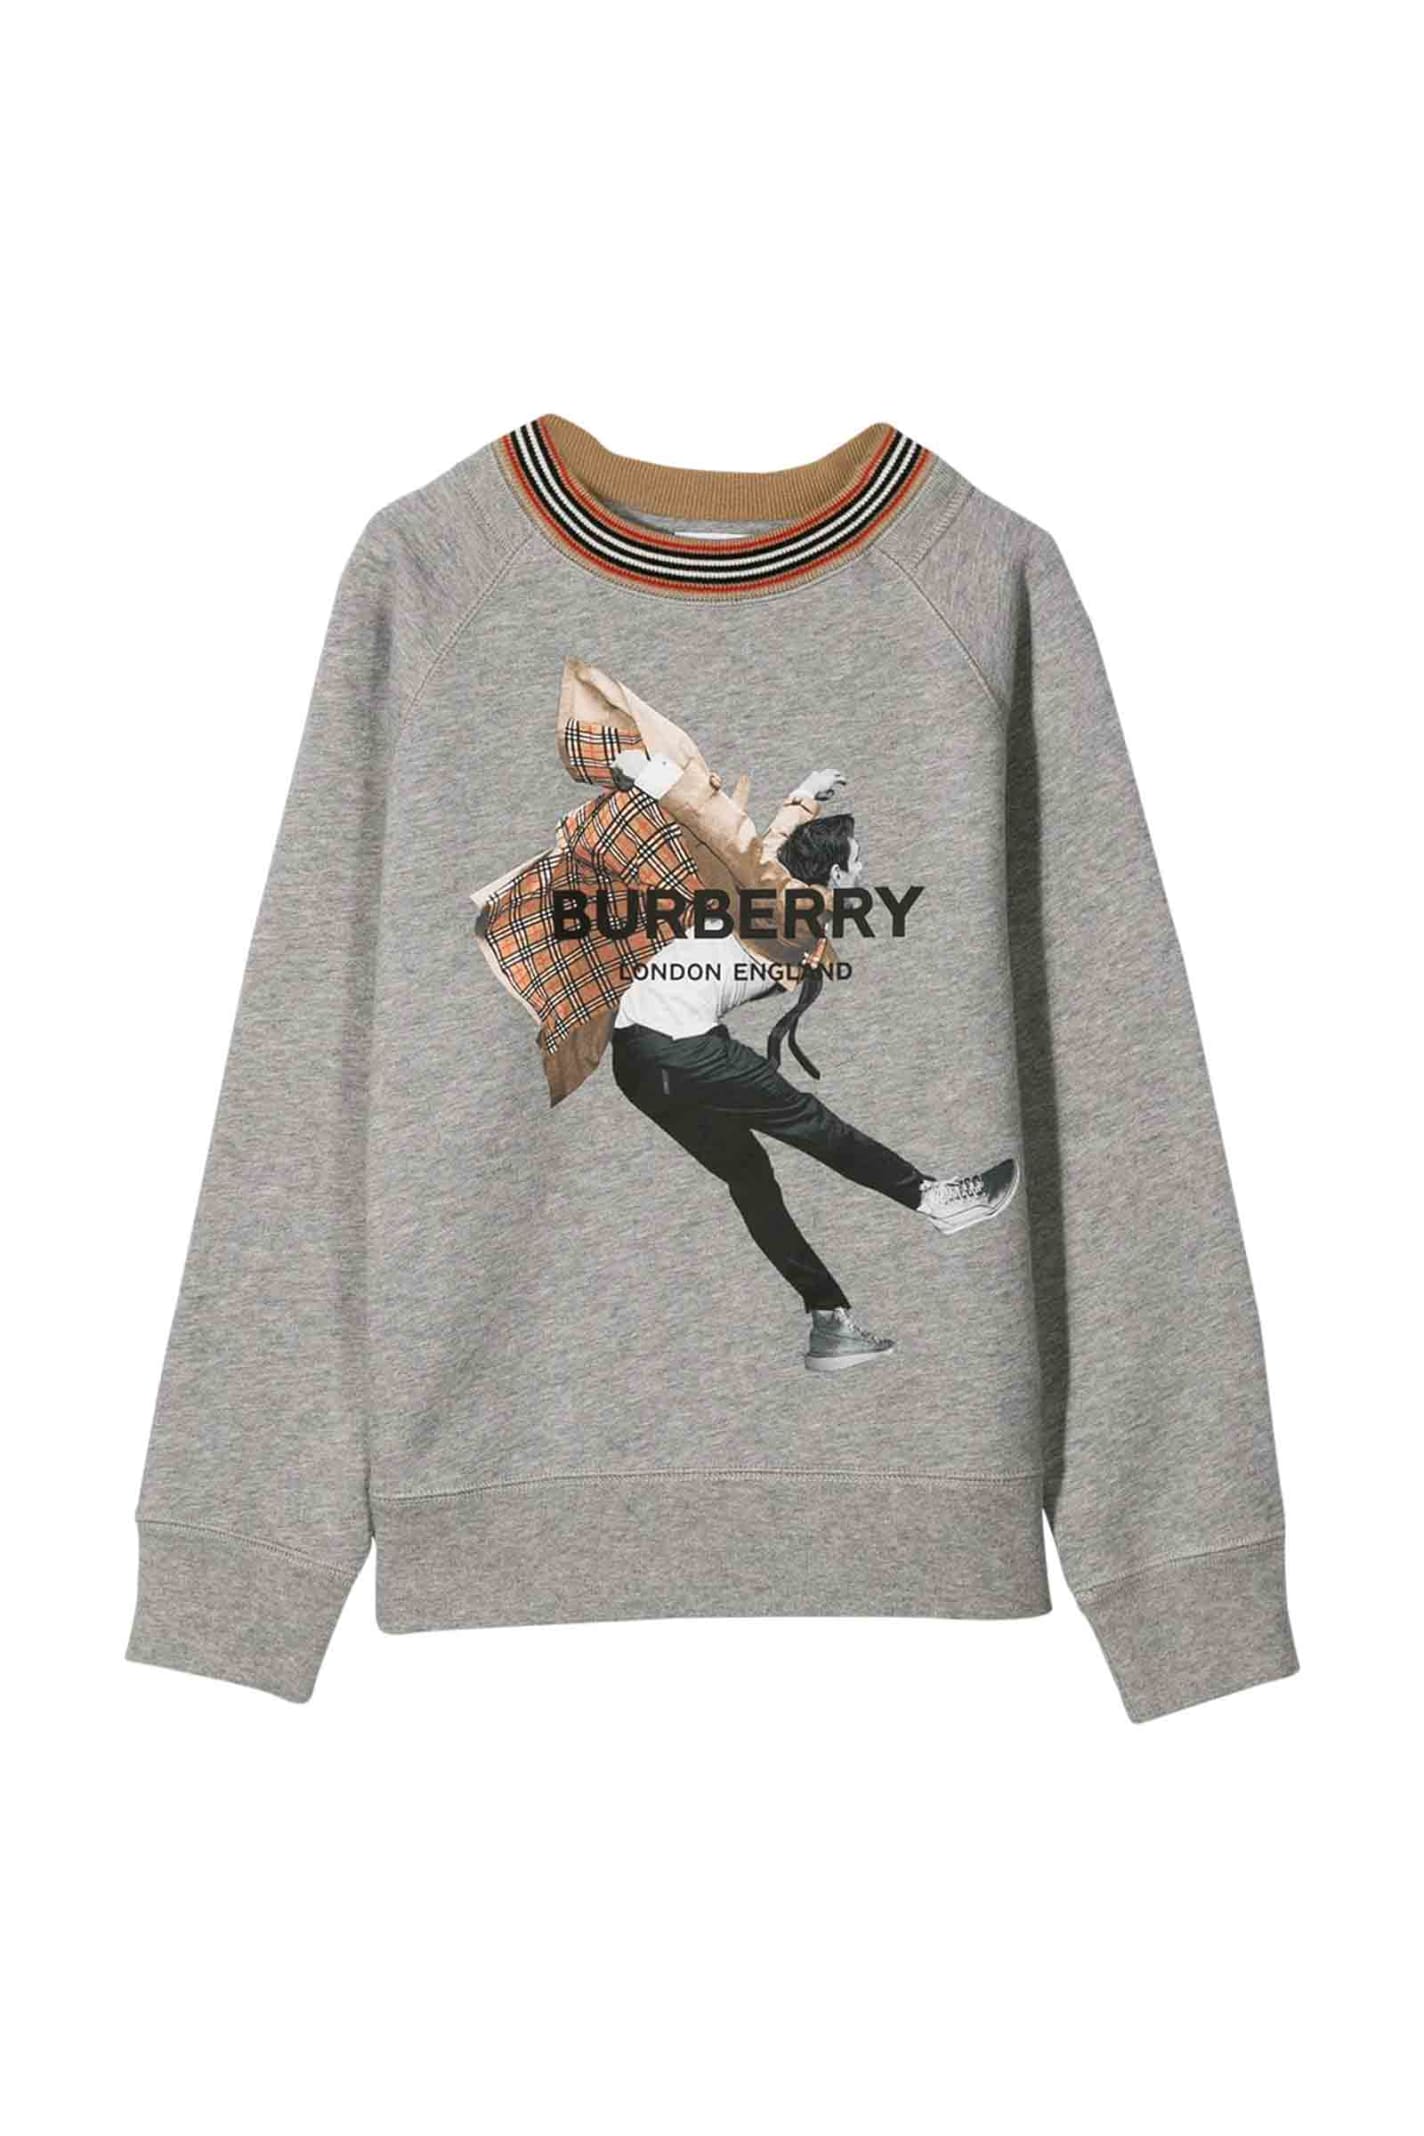 burberry crewneck sweatshirt